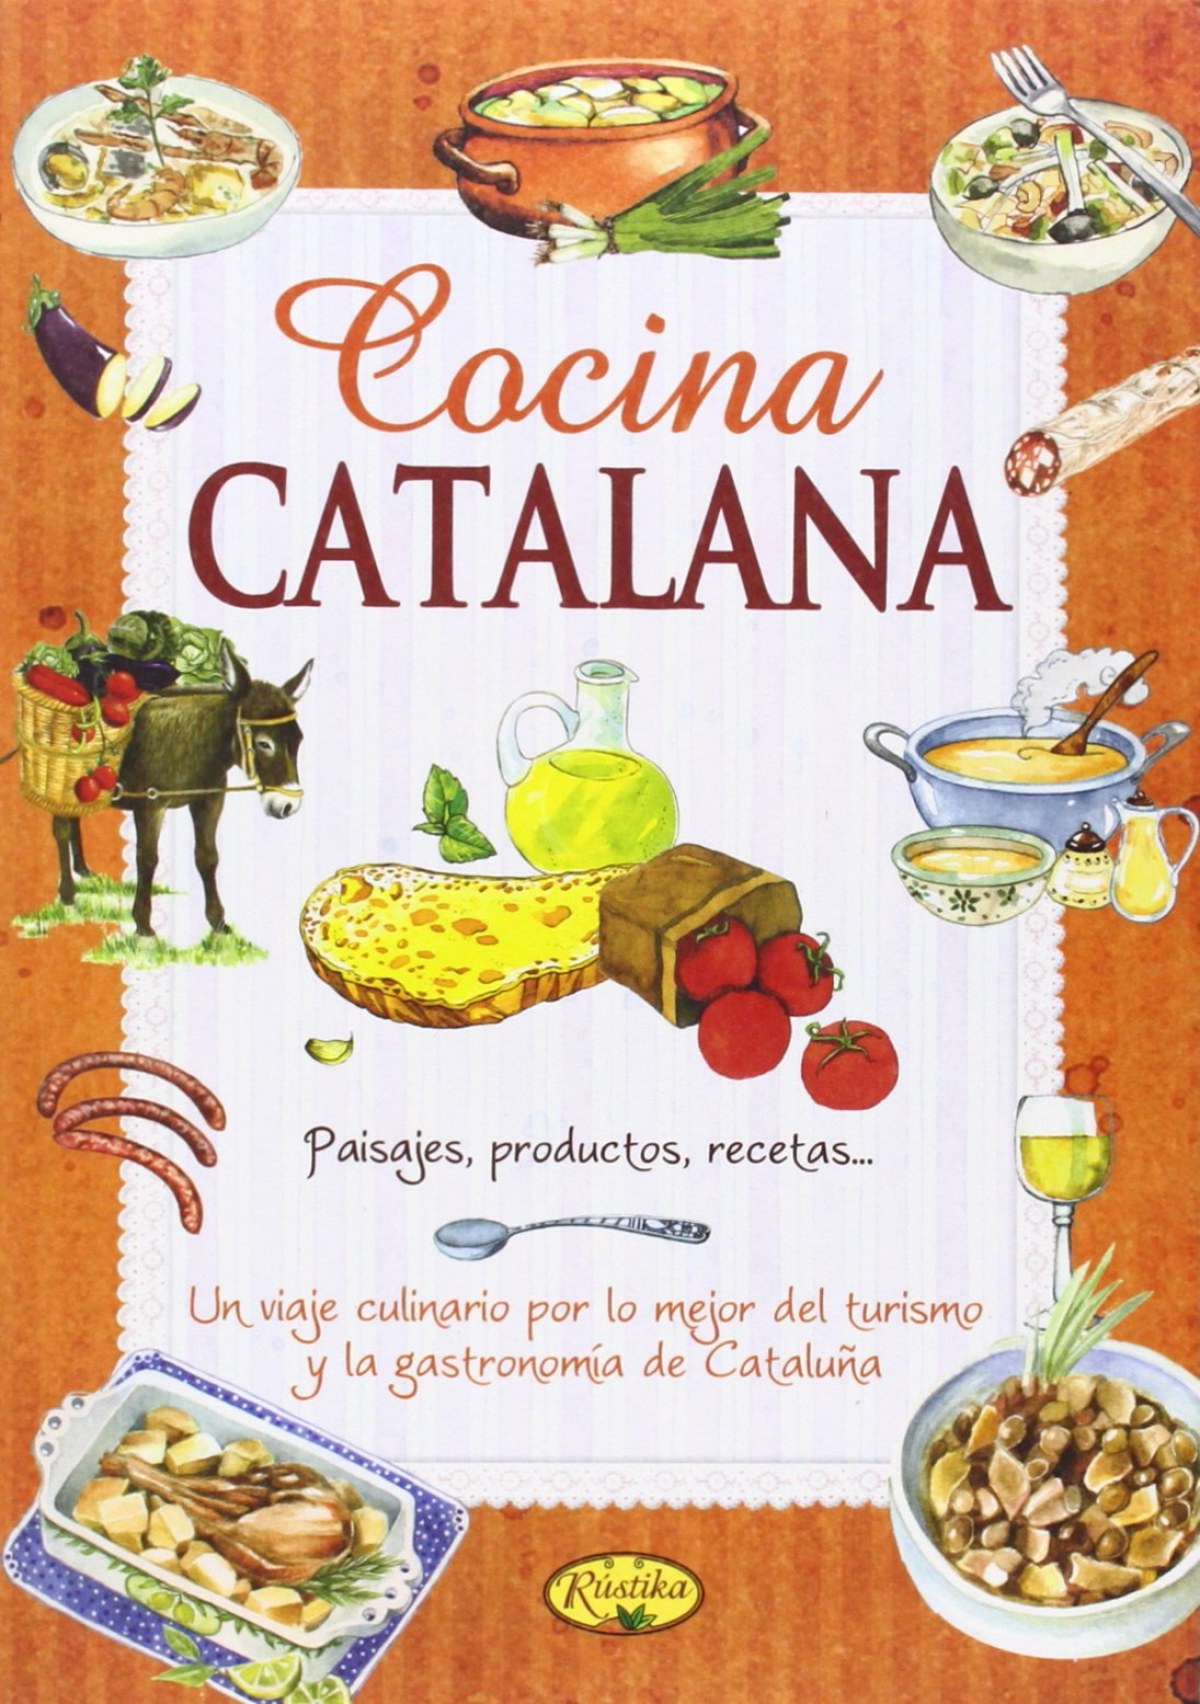 Cocina catalana - Vv.Aa.